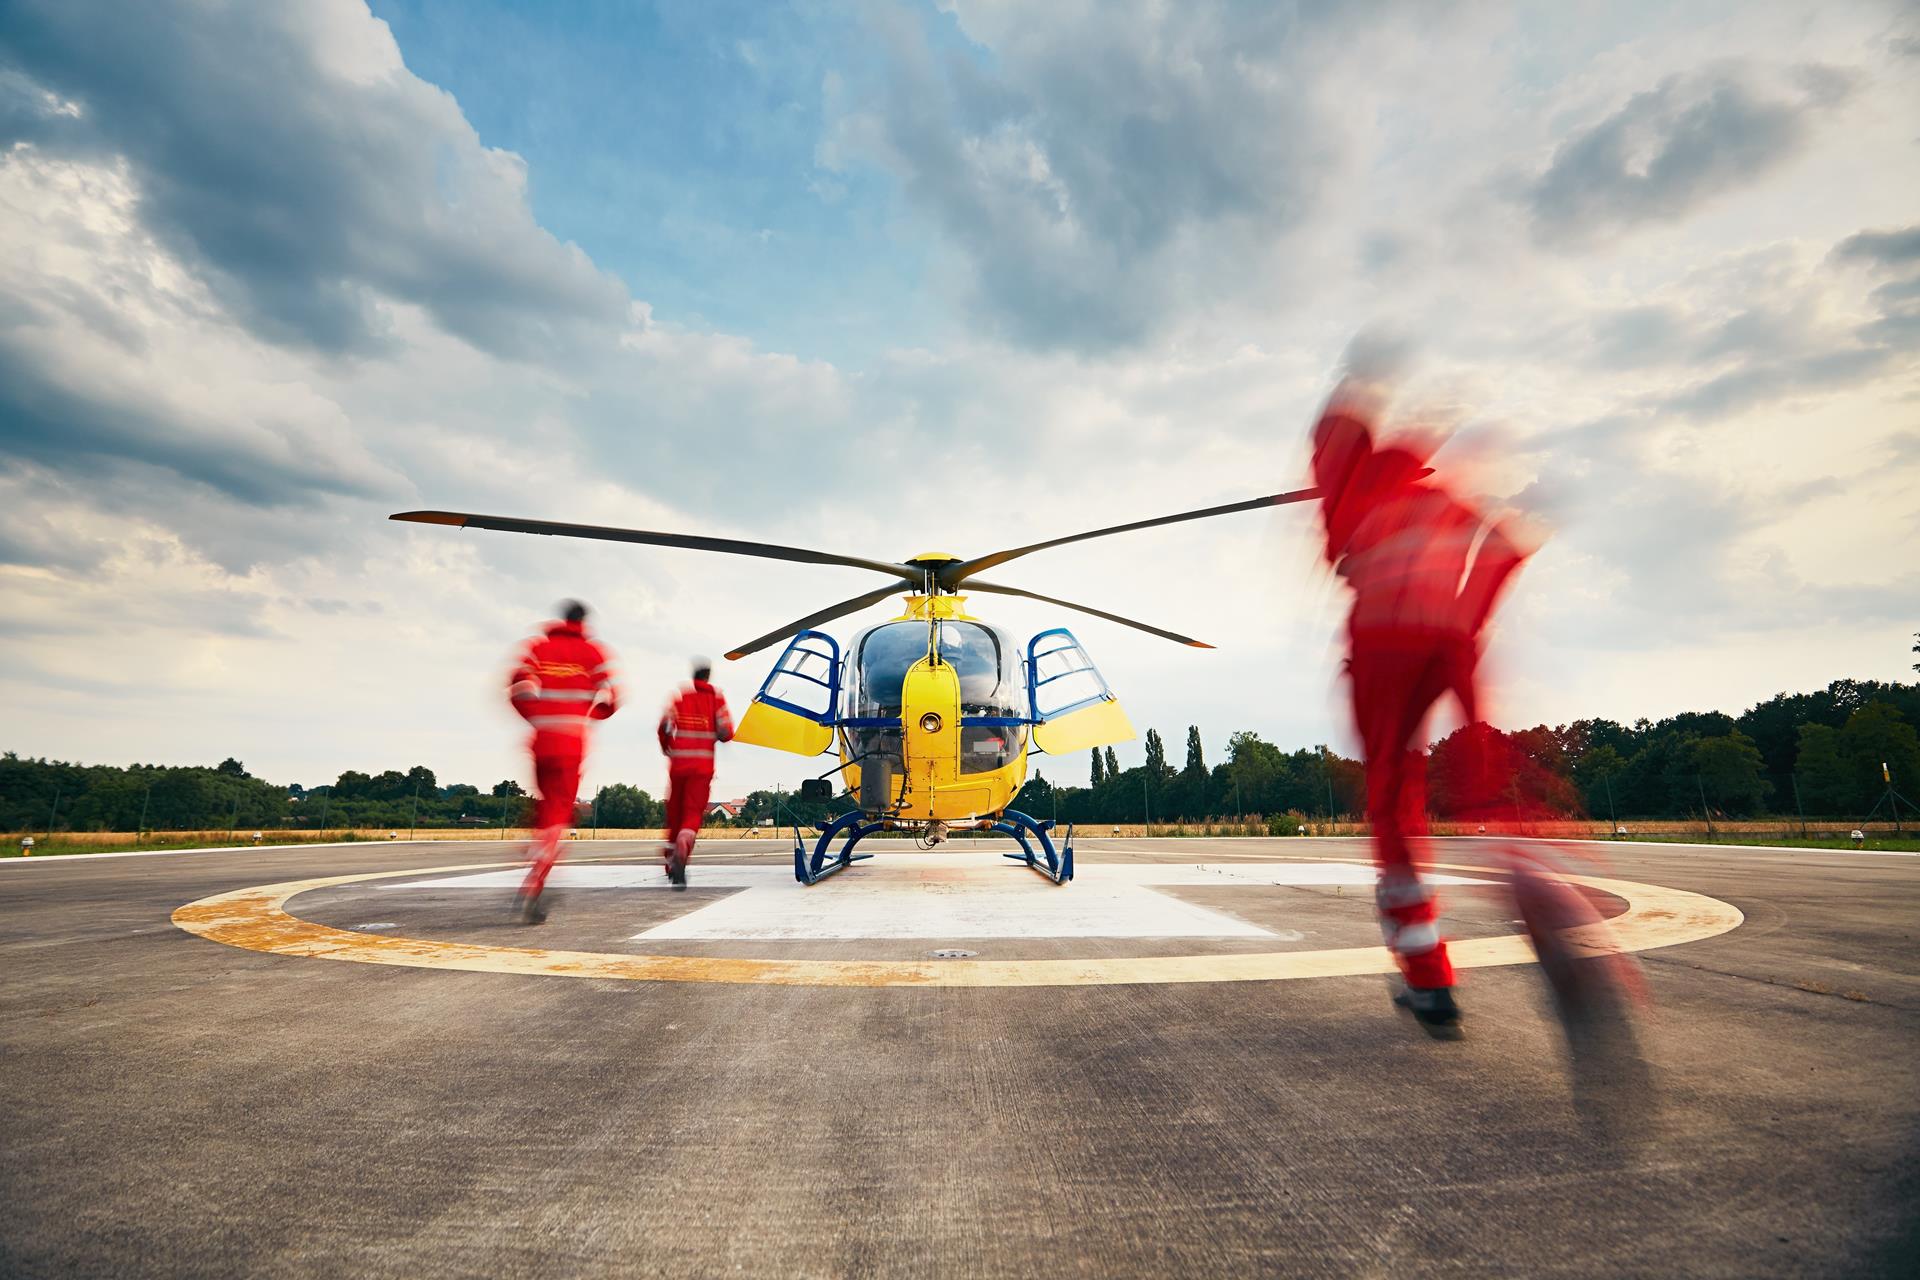 Brown&Co raise £44,085.89 for Air Ambulances UK!